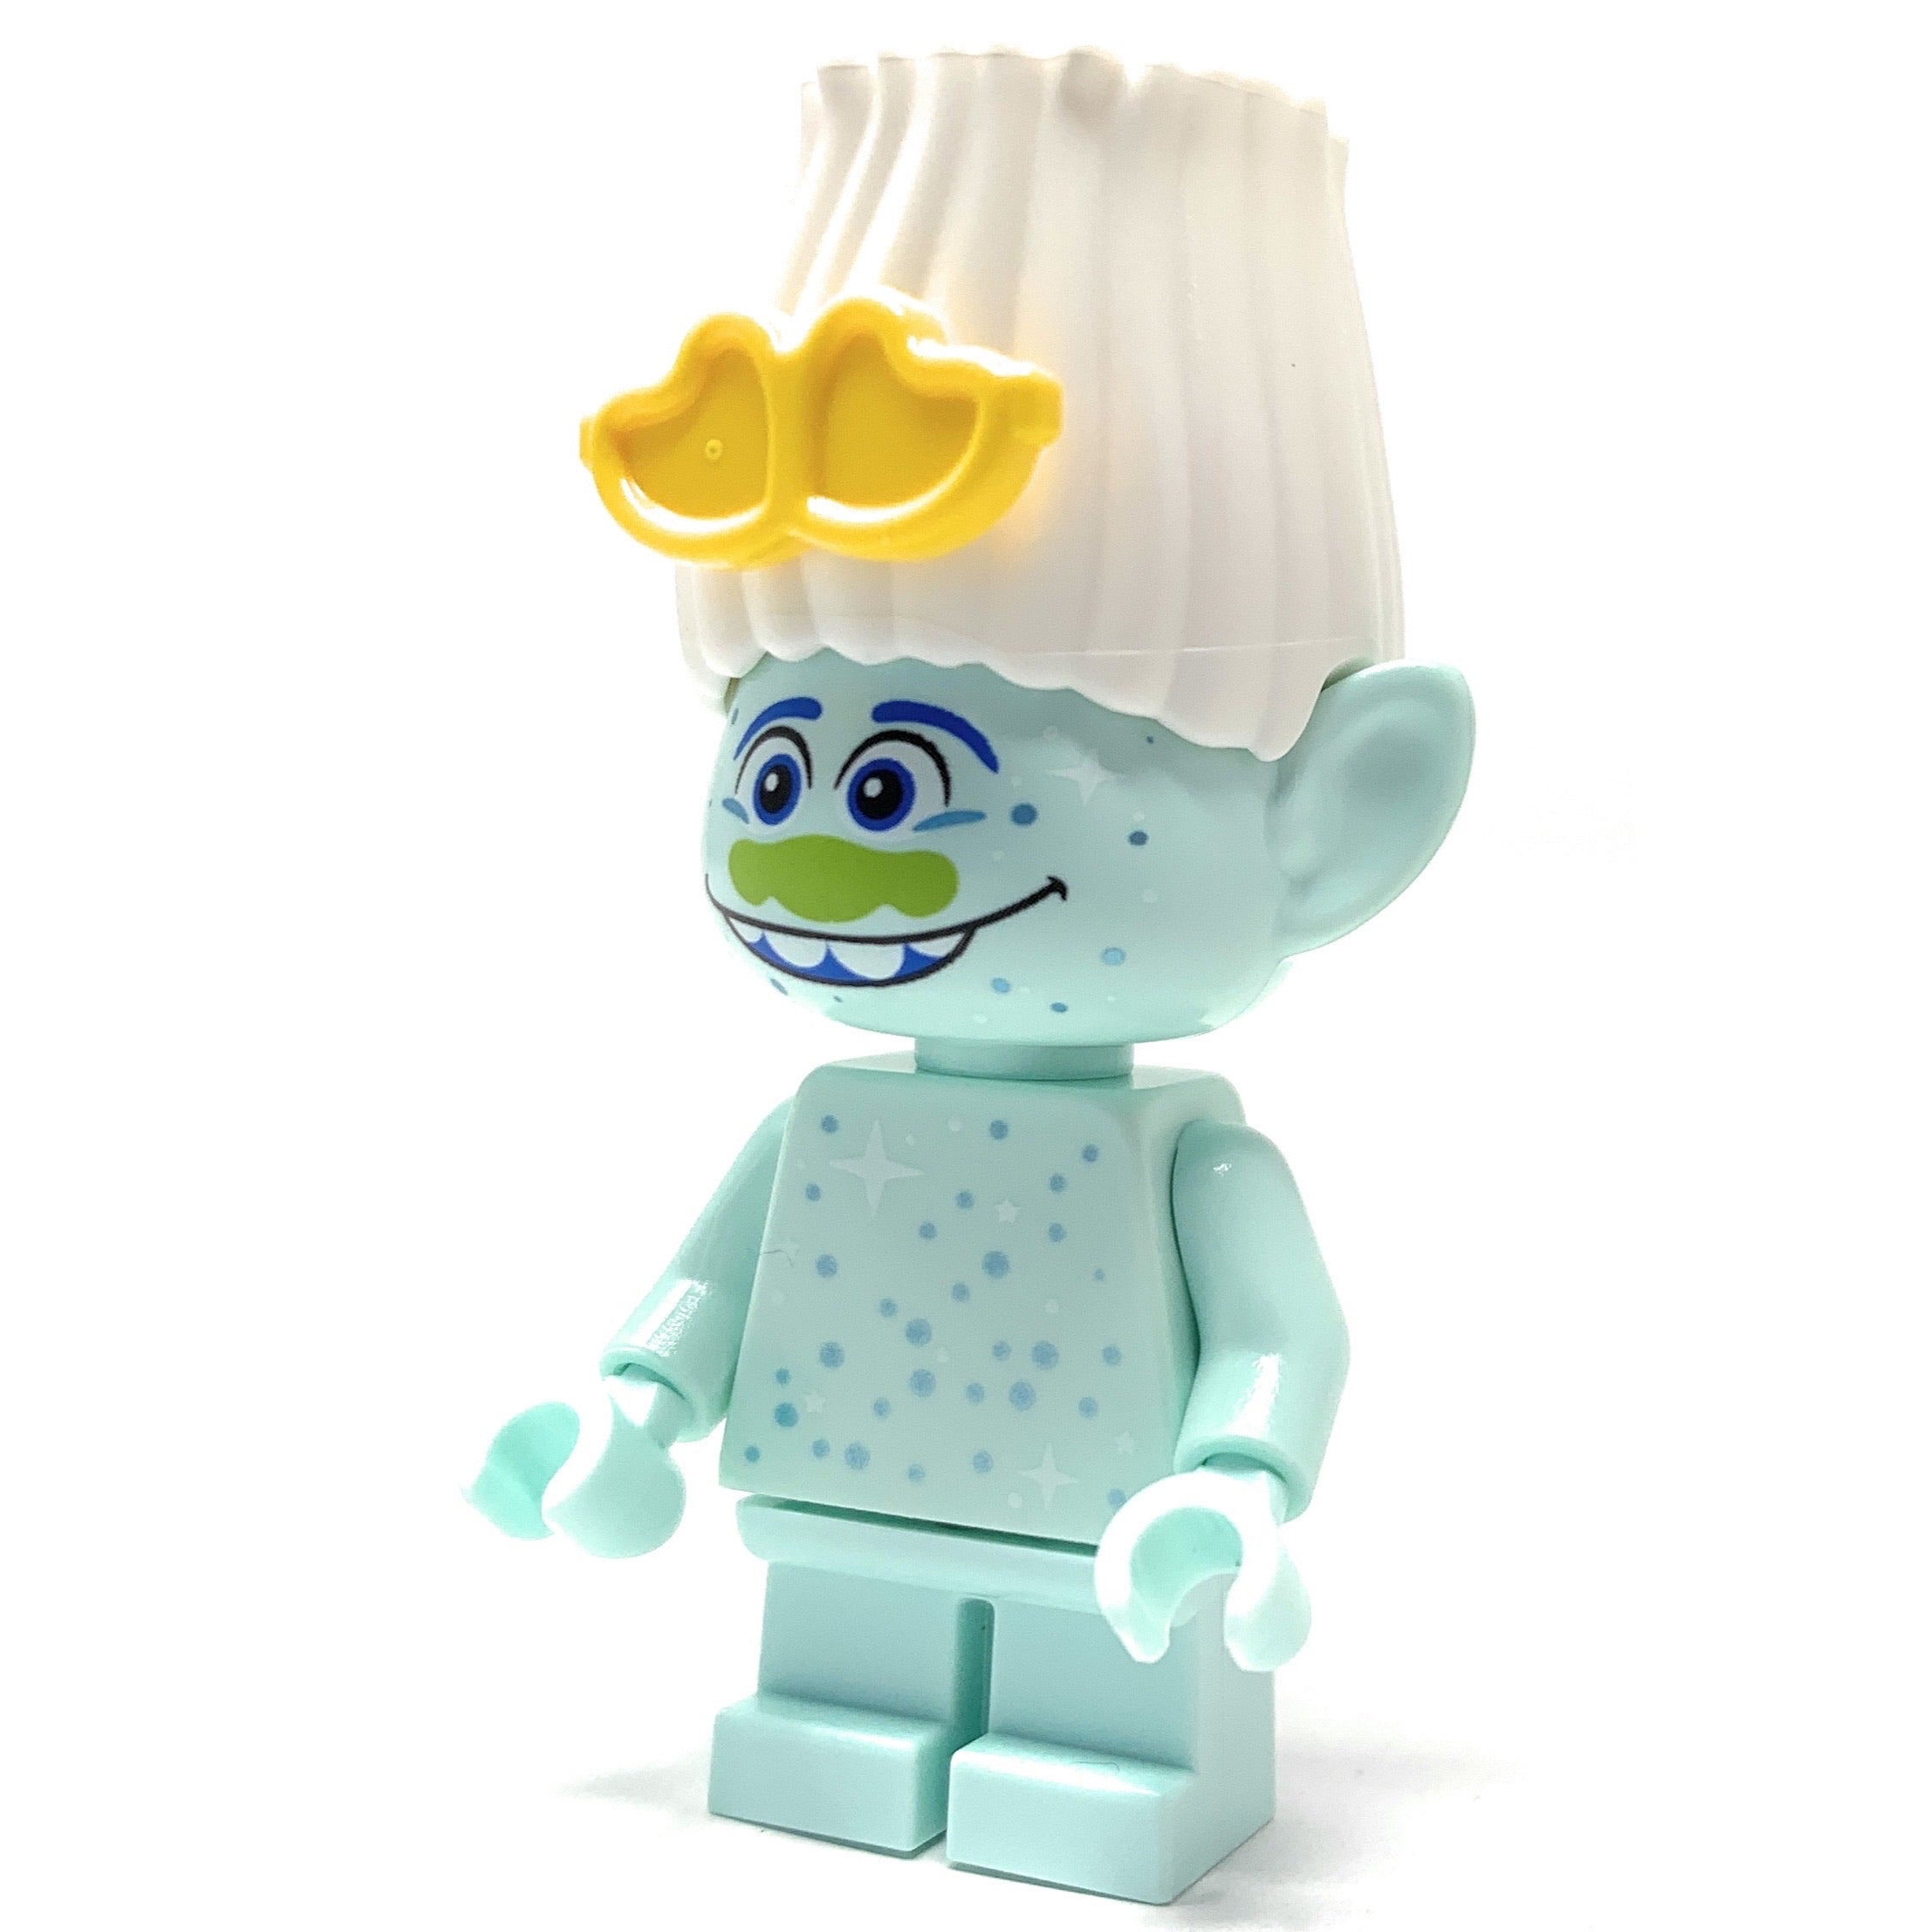 Guy Diamond - LEGO Trolls Minifigure (2020)